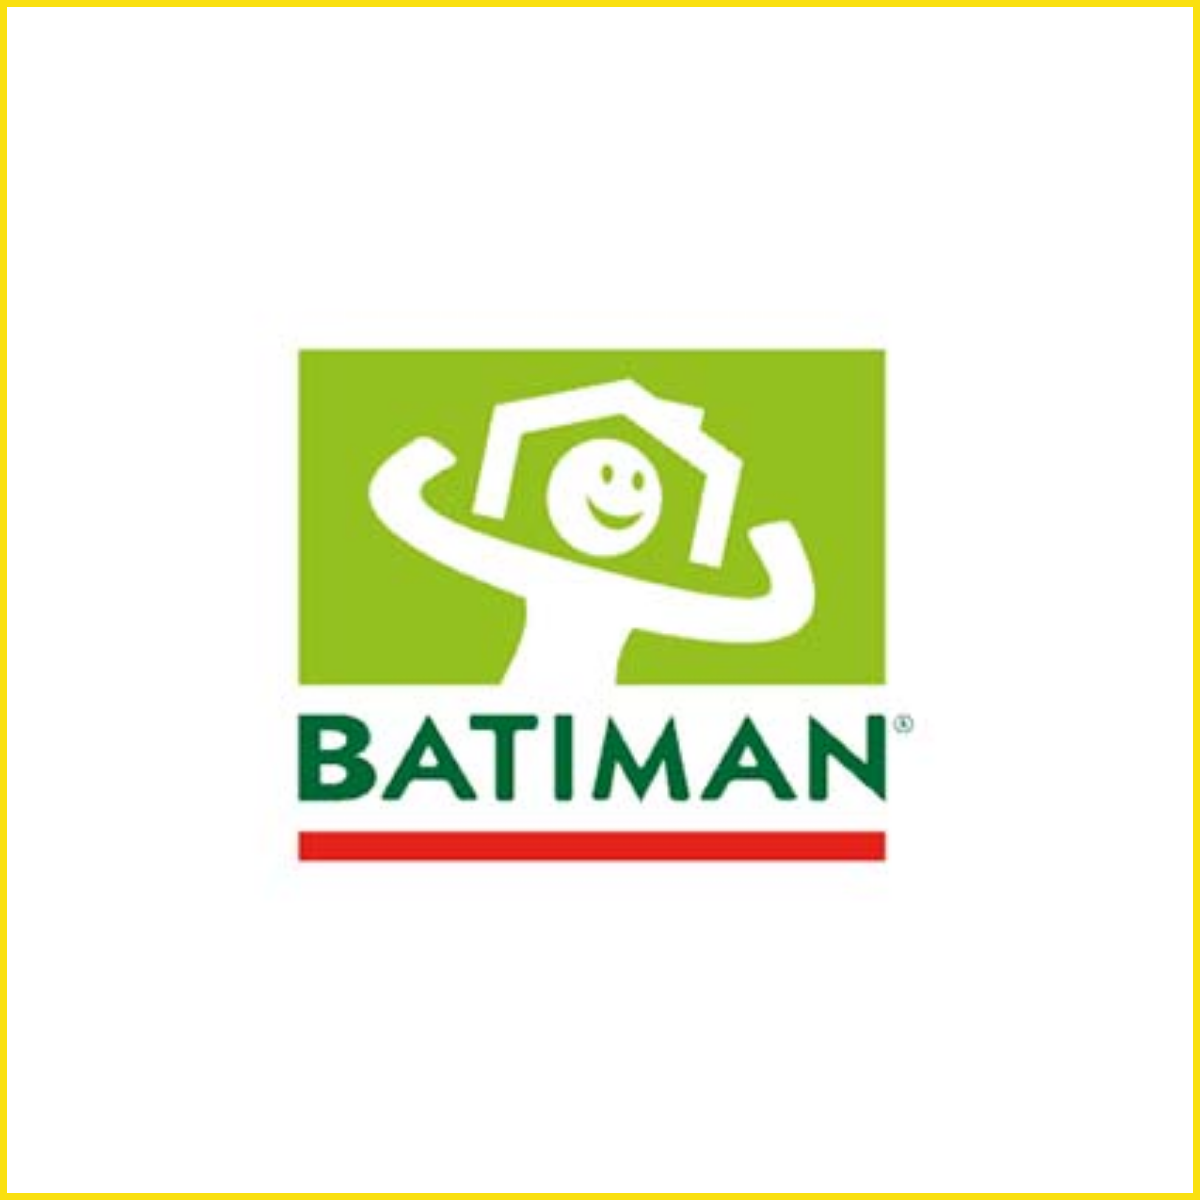 Batiman - Metrixx